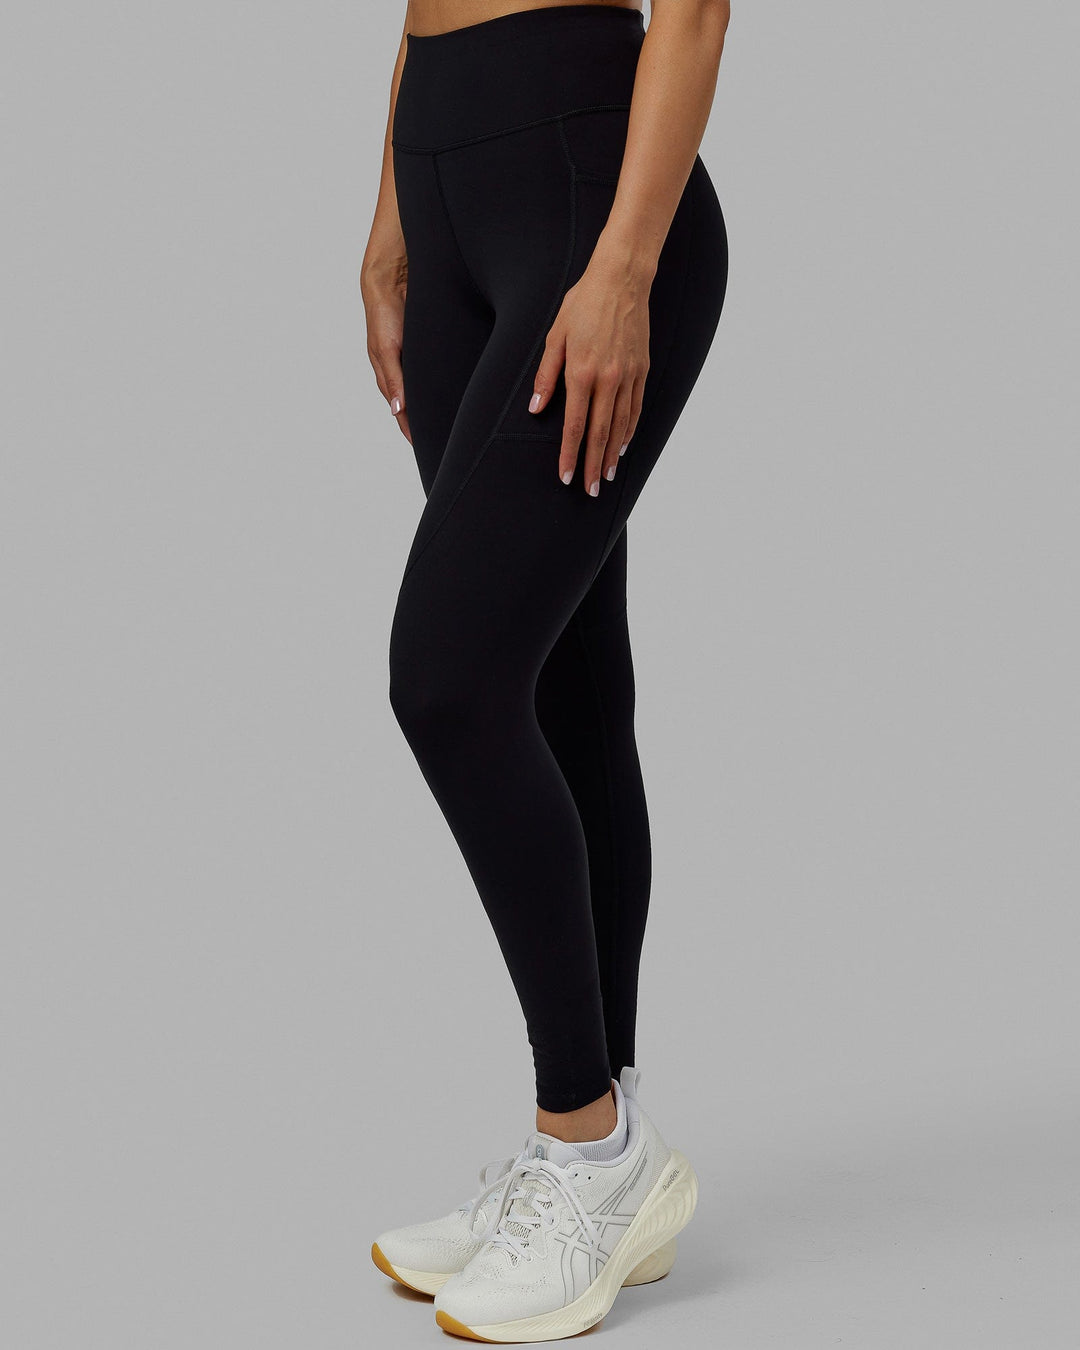 Woman wearing Rep No Logo Full Length Tights - Black